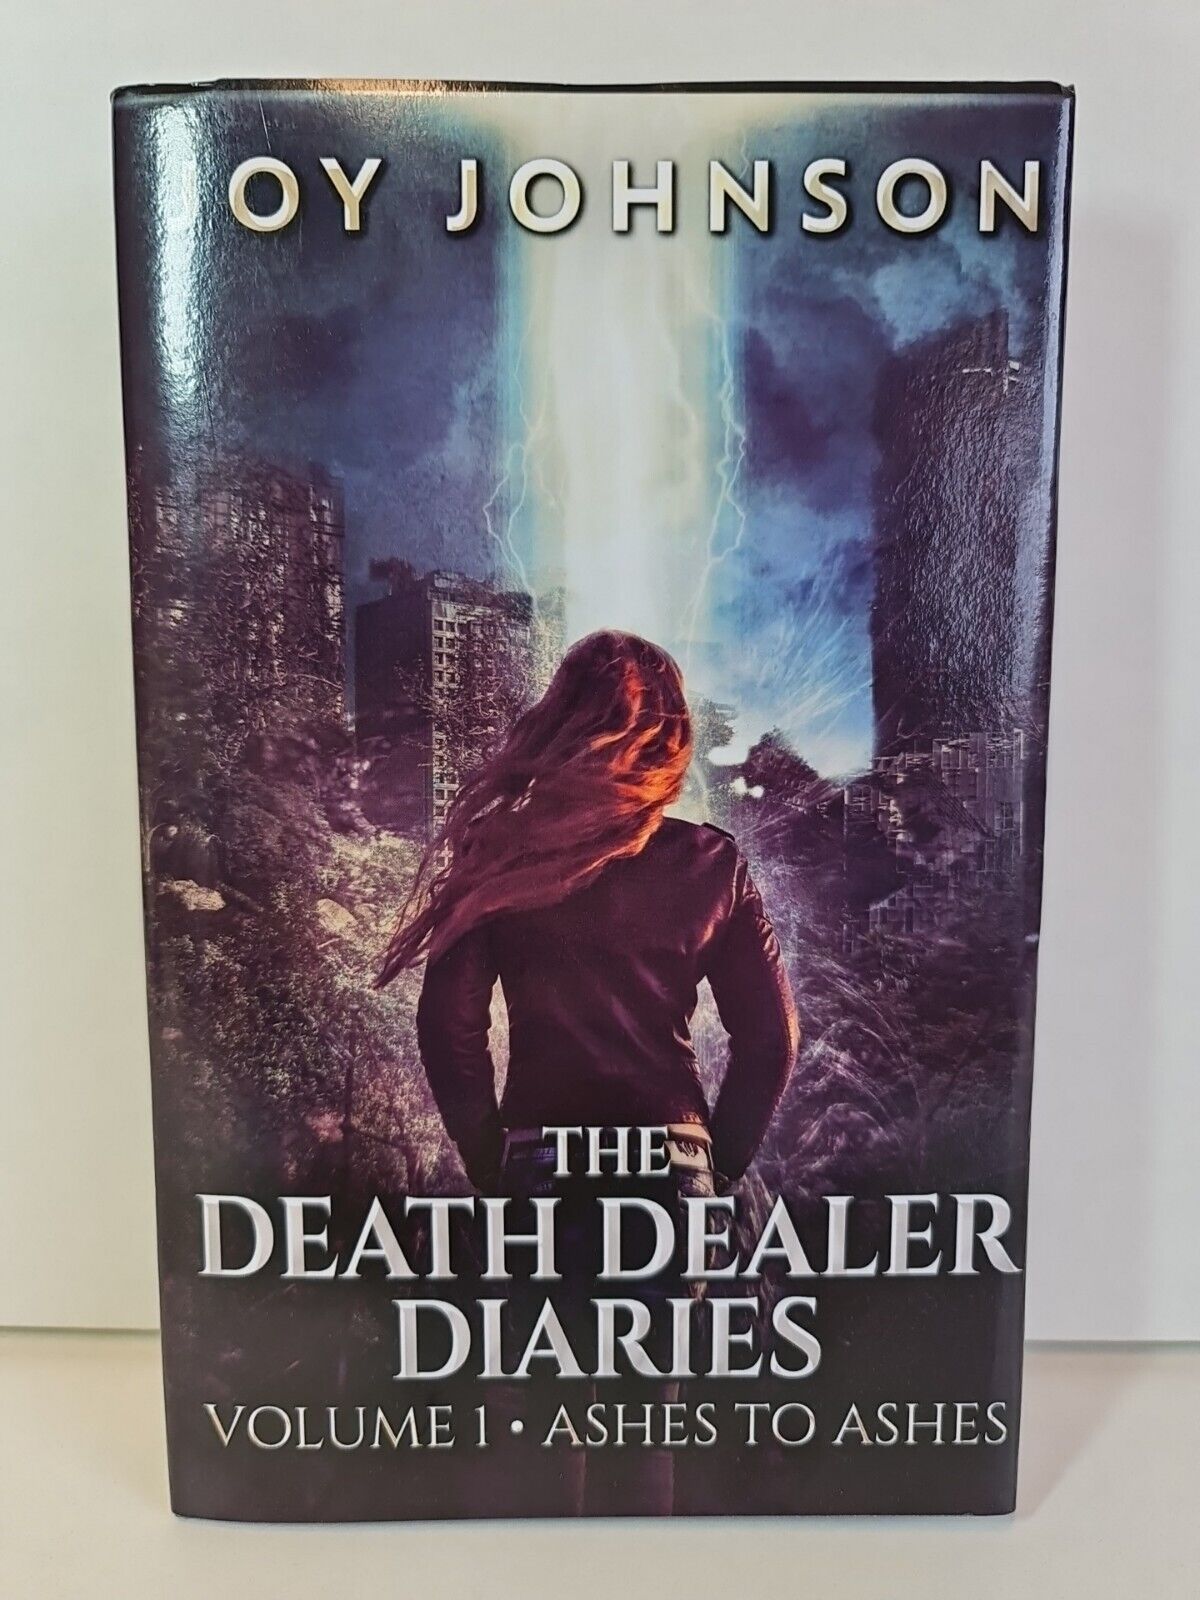 The Death Dealer Diaries by Joy Johnson - Premium Hardcover Edition 2021